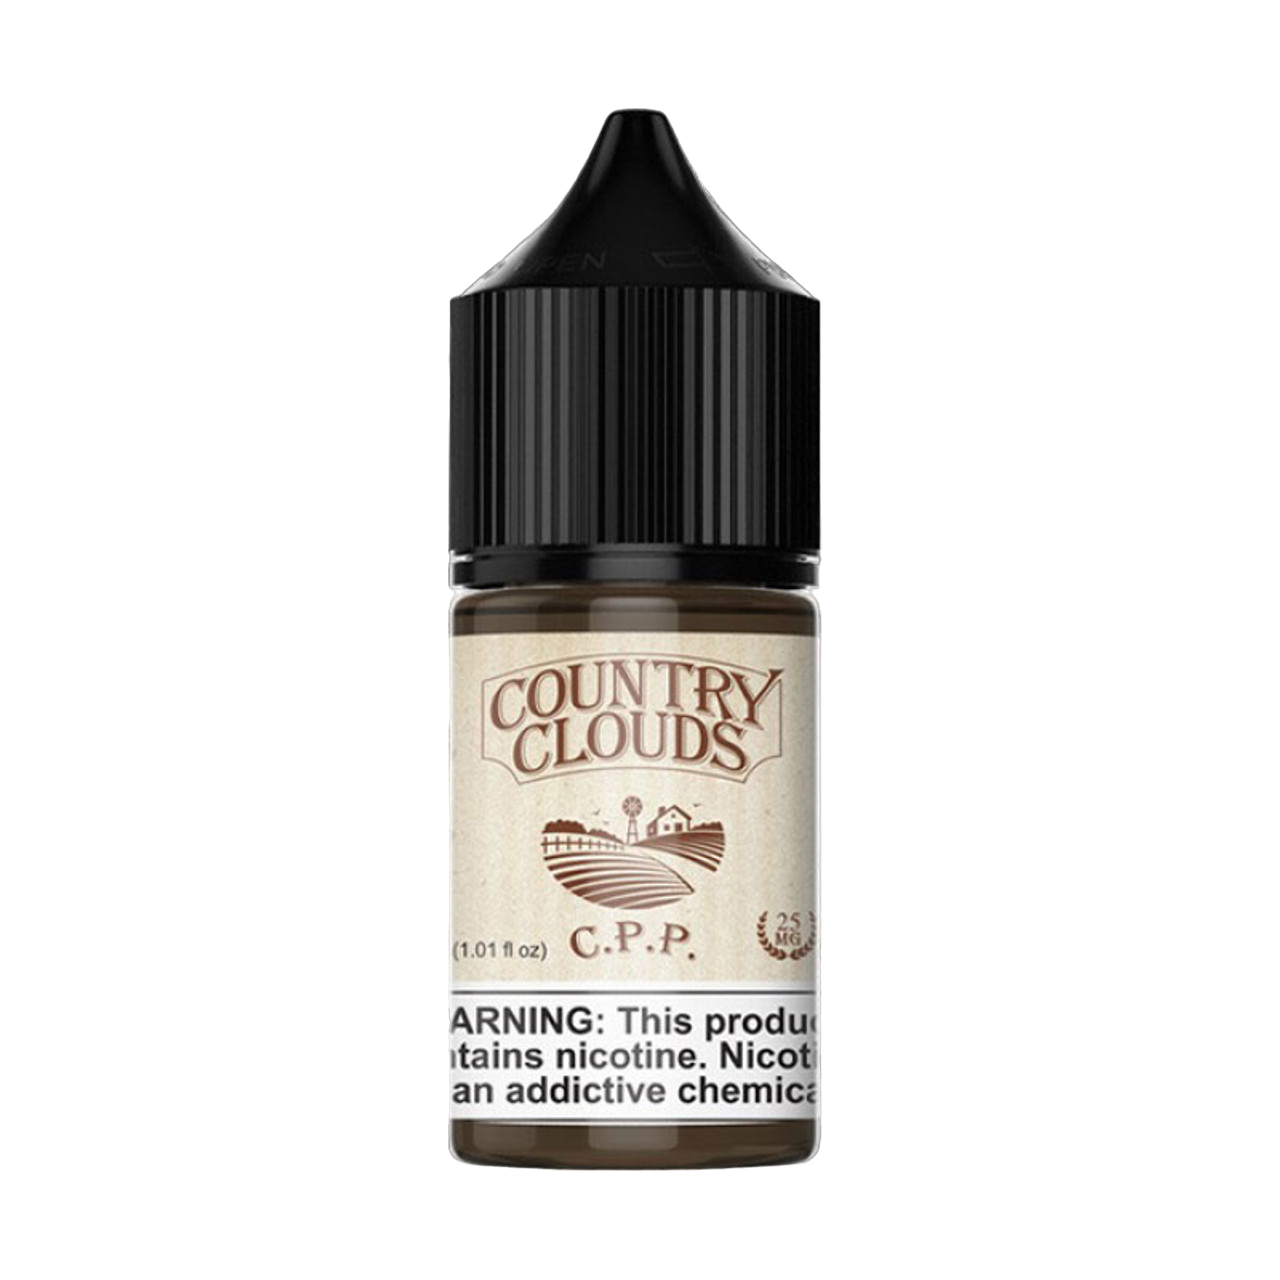 Country Clouds Salts Nicotine Salt E-Liquid 30ML Chocolate Puddin'